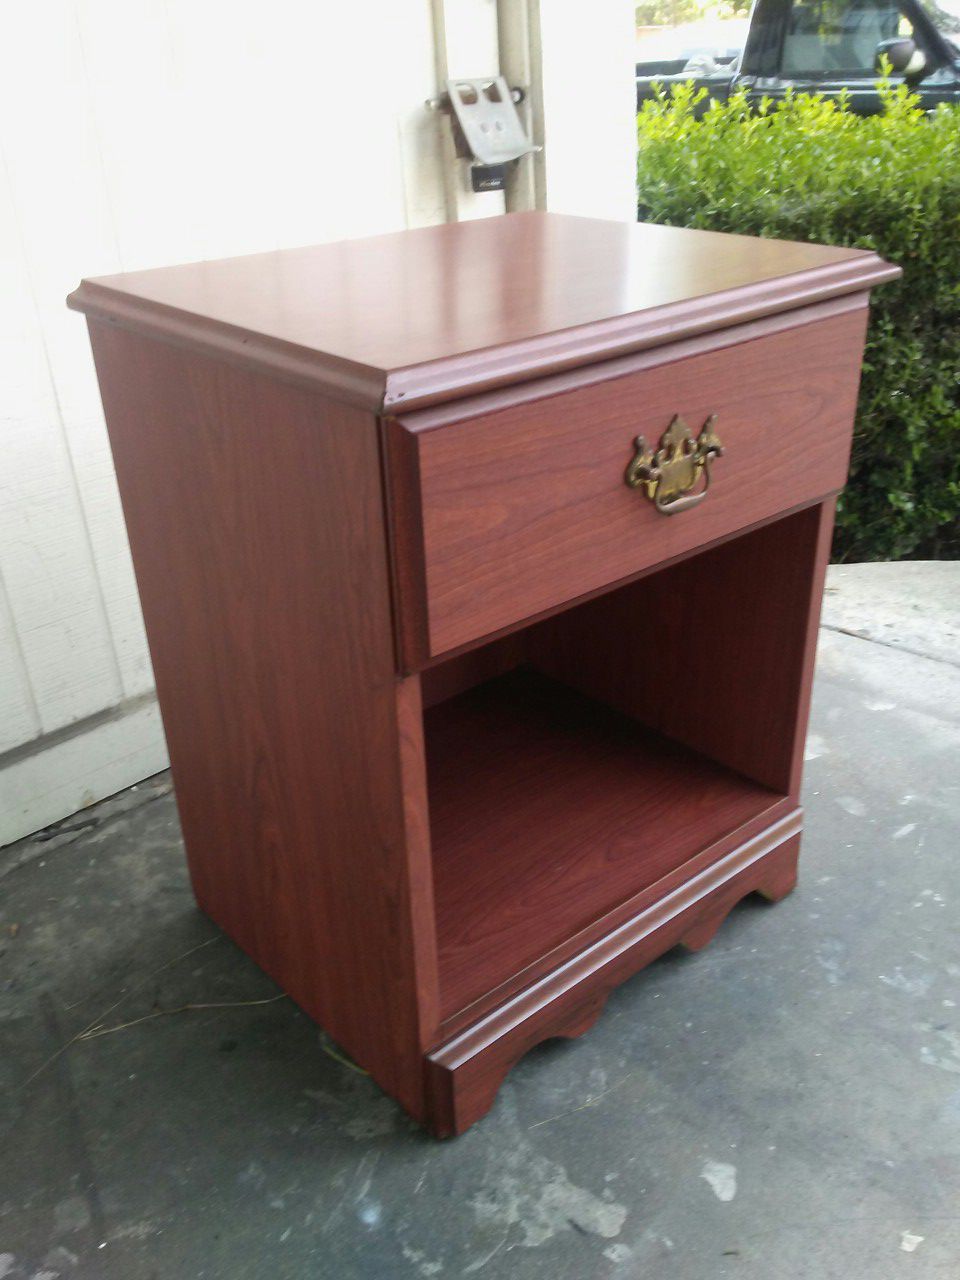 1) CW CASEWORK. FURNITURE night stand/ 1 drawer/organizer in good condition